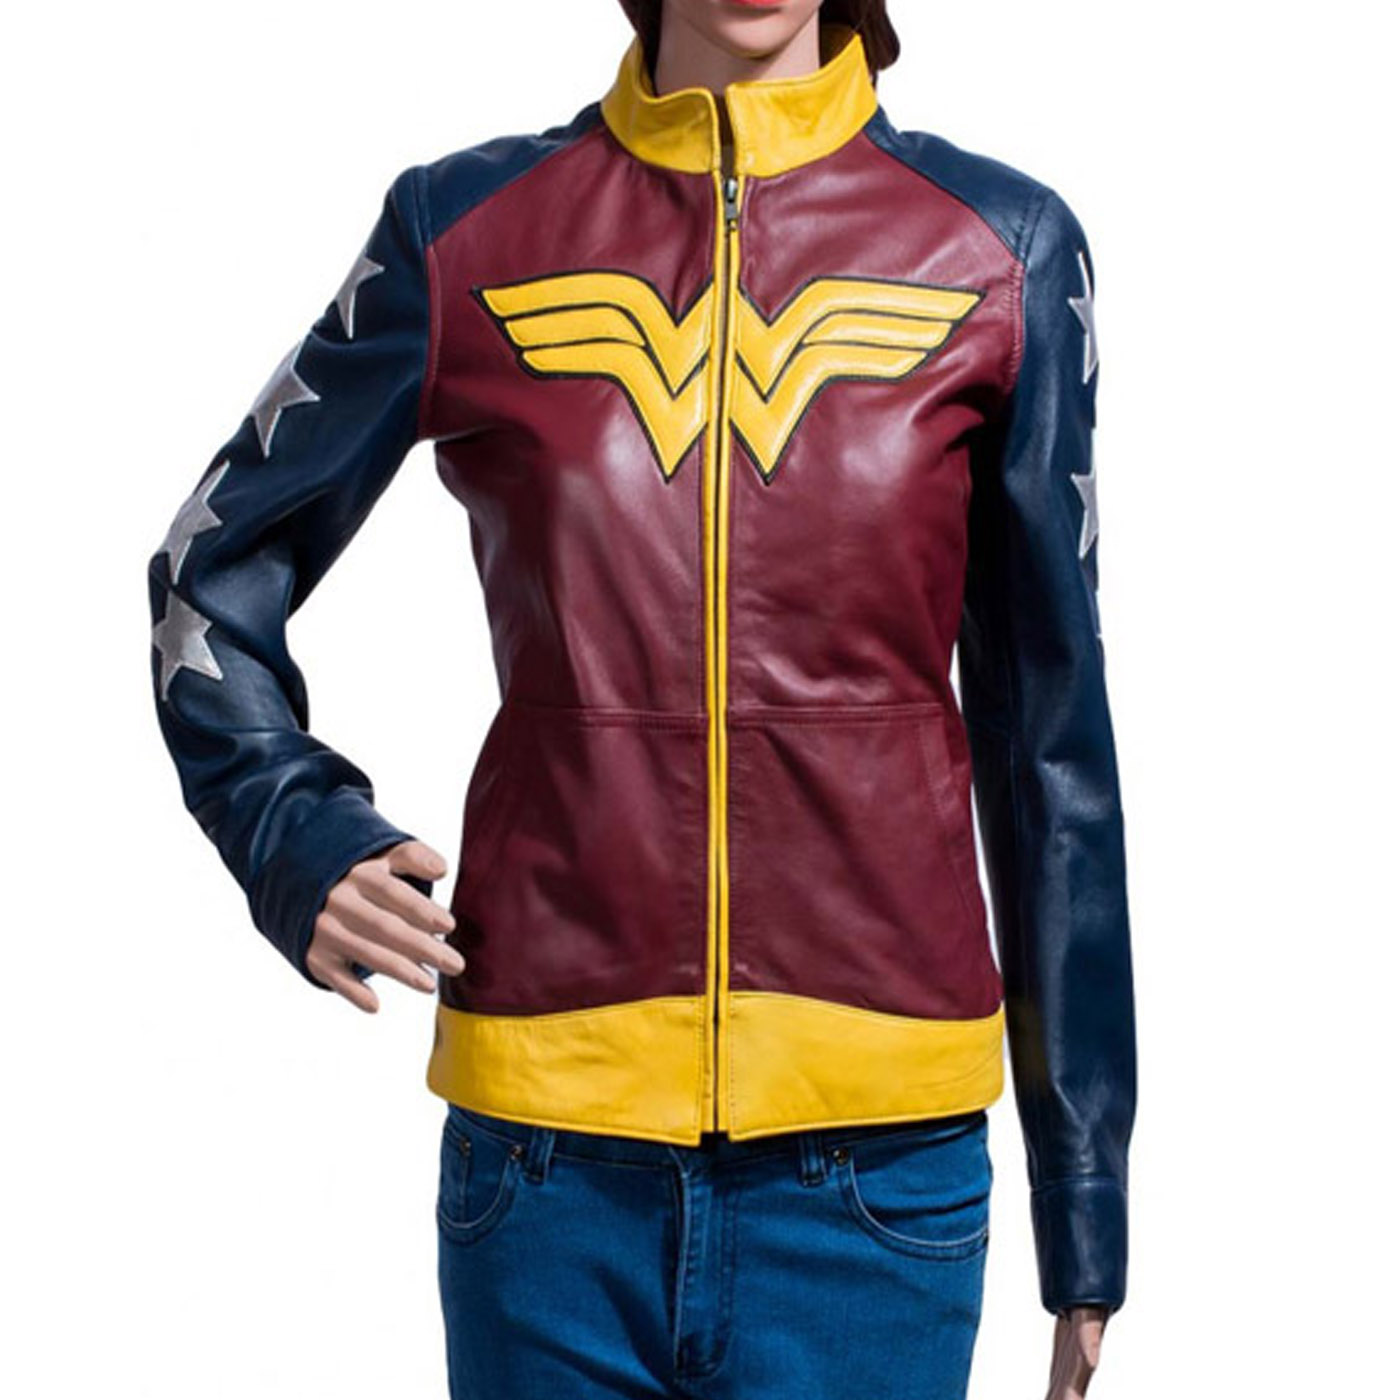 Wonder Woman Leather Jacket.